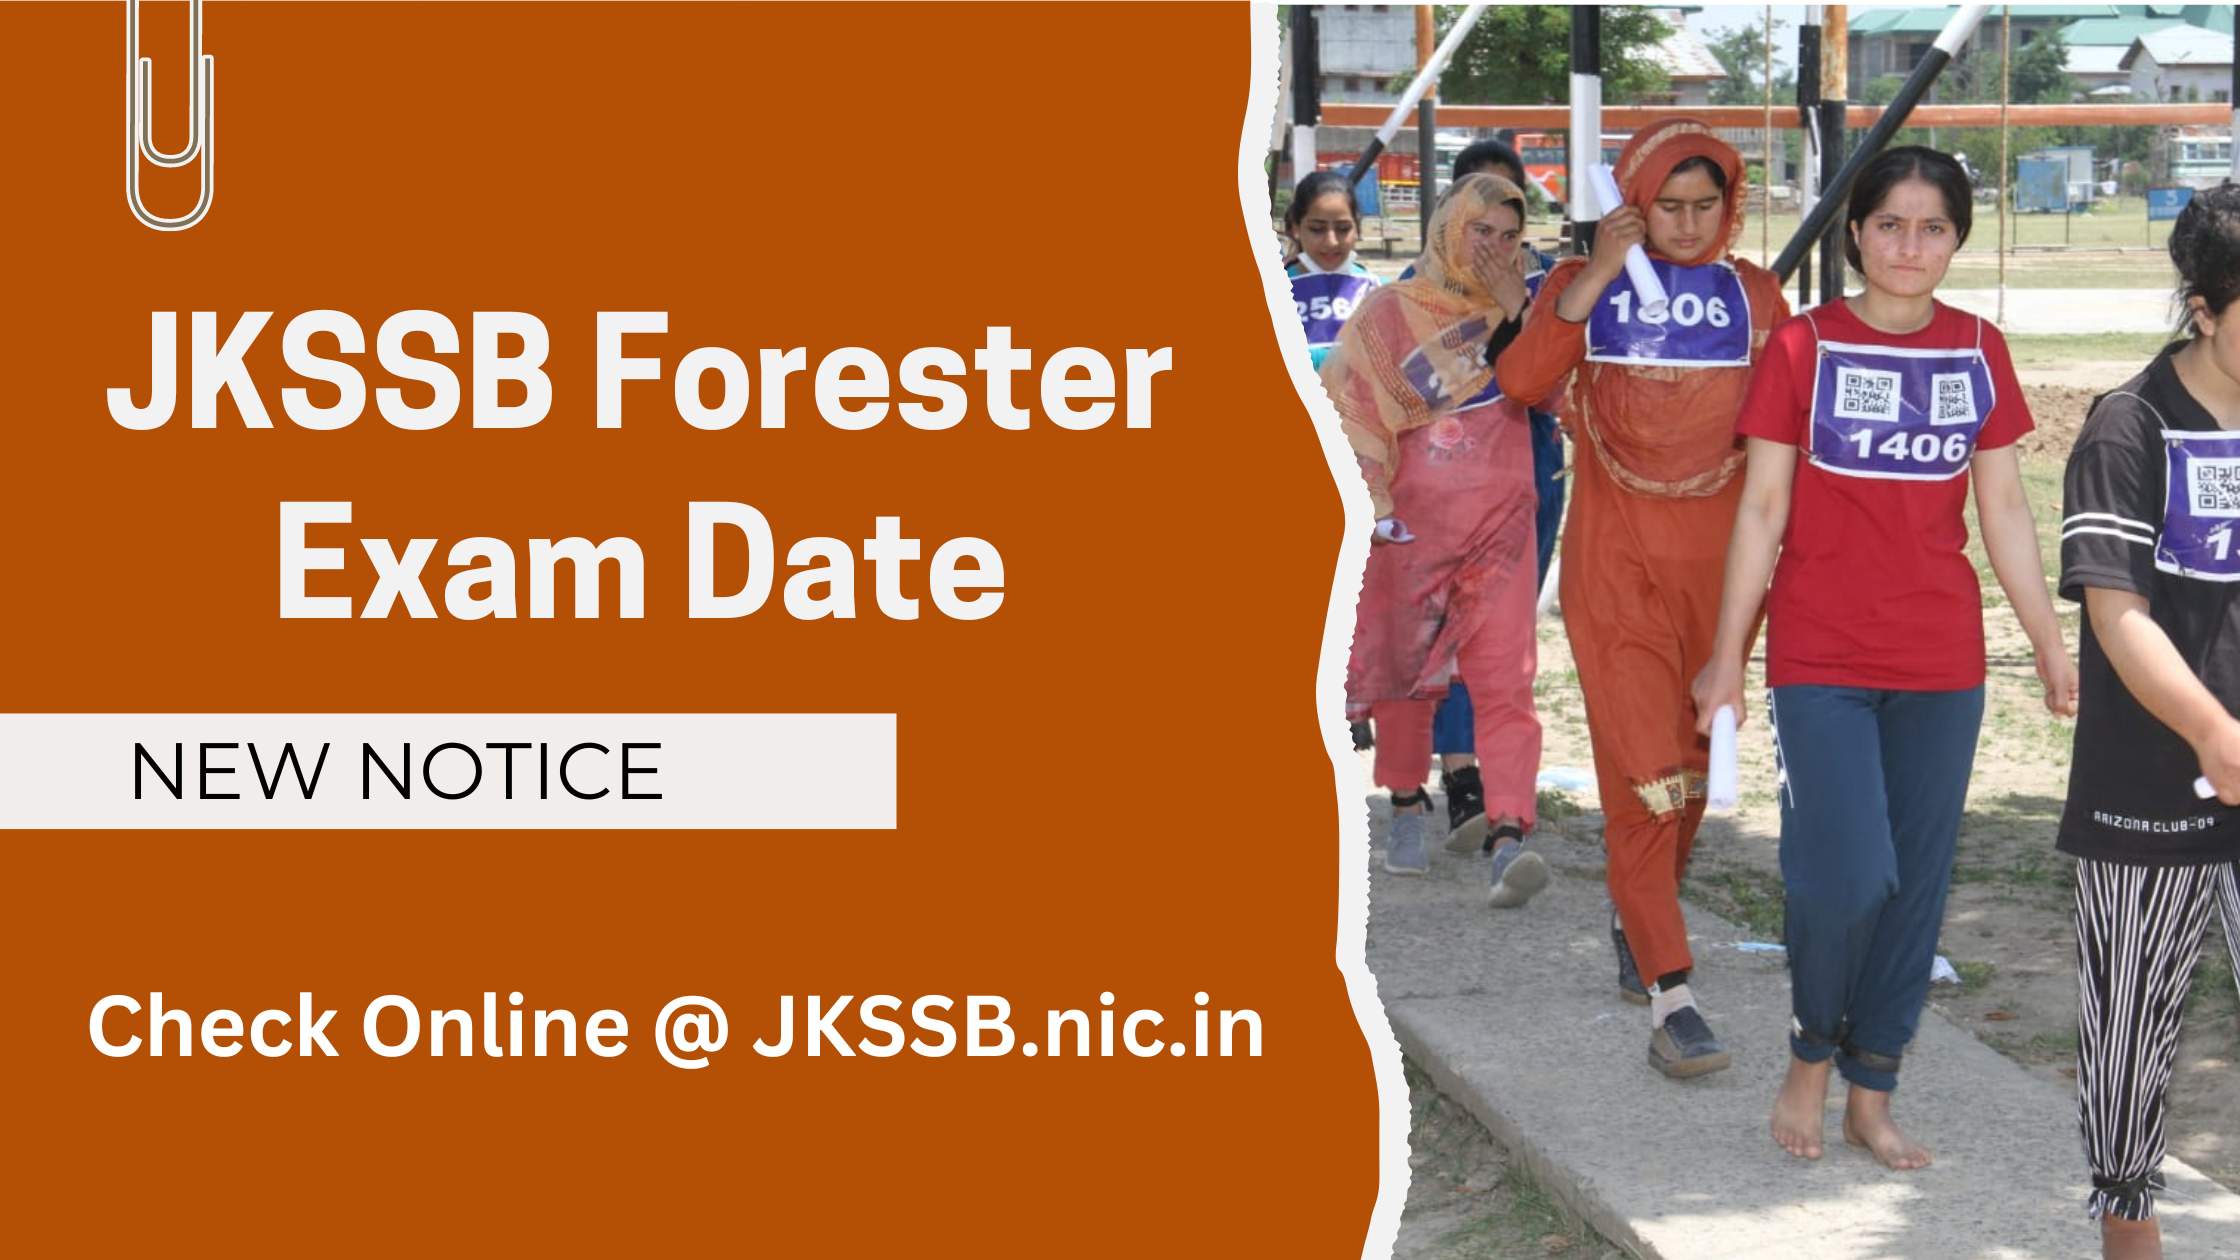 JKSSB Forester Exam Date